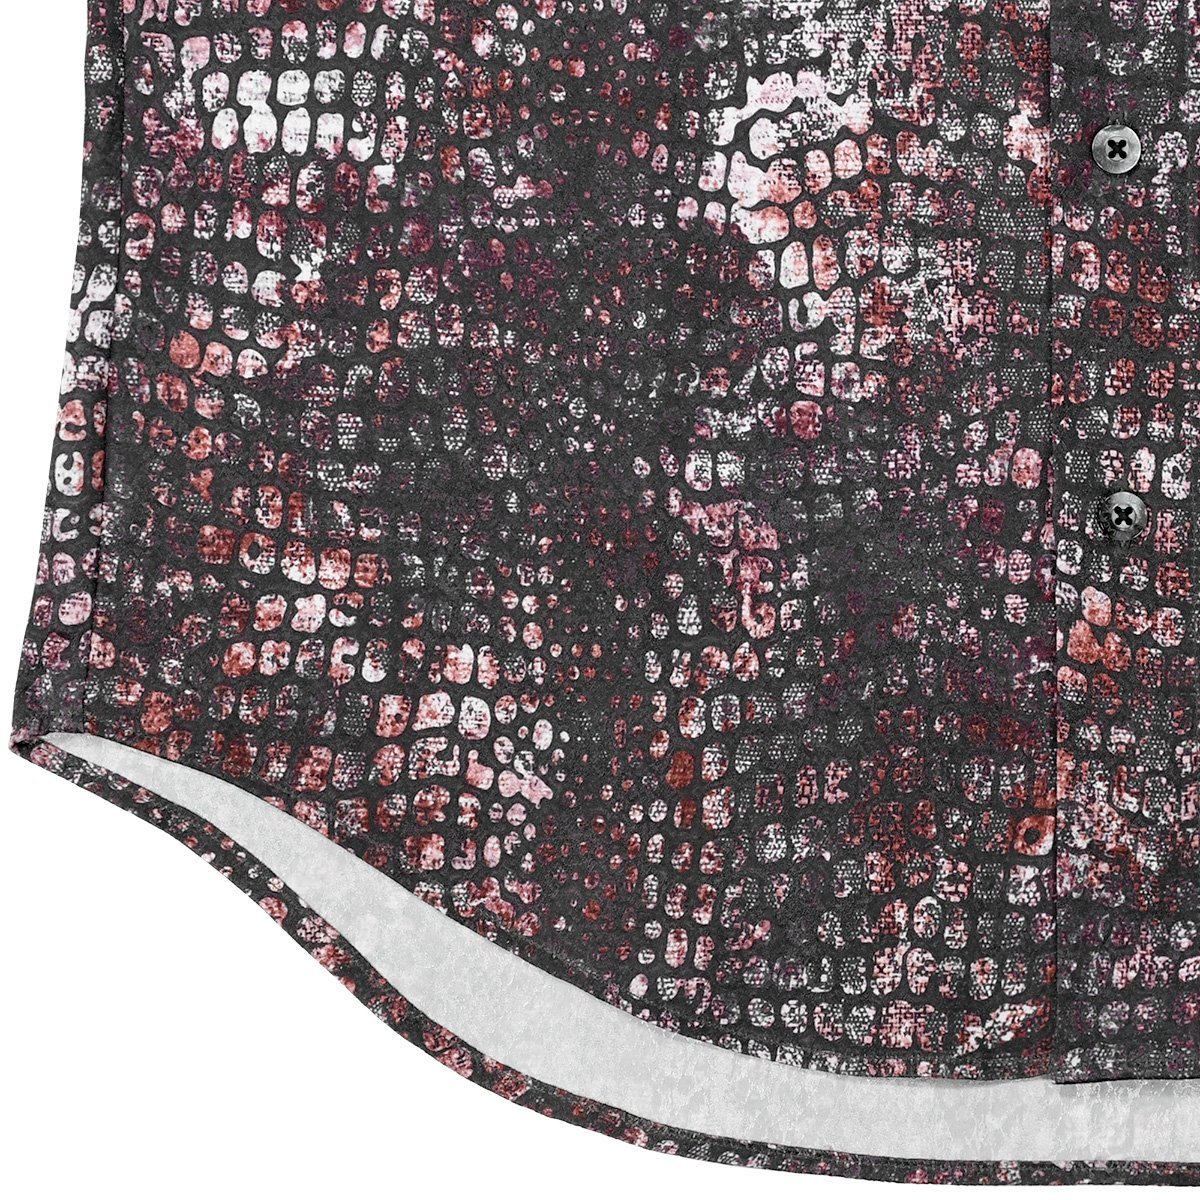 211200-win BlackVaria ドゥエボットーニ 蛇柄 サテンドレスシャツ 衿先スナップボタン パイソンジャガード メンズ(レッド赤ワイン) XL_画像4